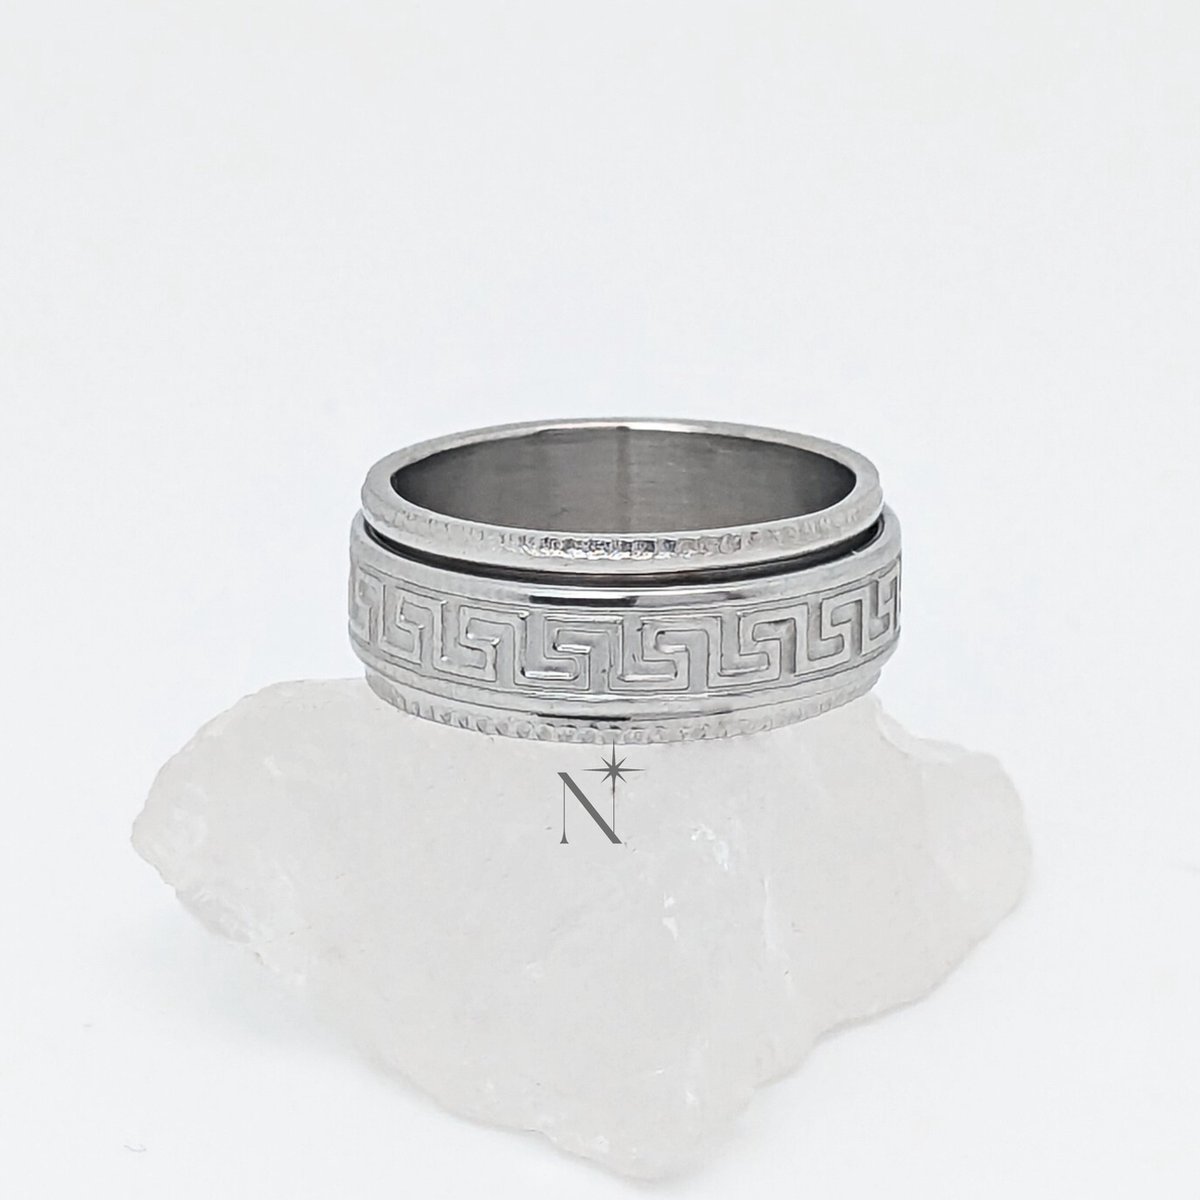 Luminora Zeus Ring Zilver - Fidget Ring Grieks - Anxiety Ring - Stress Ring - Anti Stress Ring - Spinner Ring - Spinning Ring - Draai Ring - Maat 52 | ⌀ 16.5 - RVS Ring - Stainless Steel Ring - Wellness Sieraden